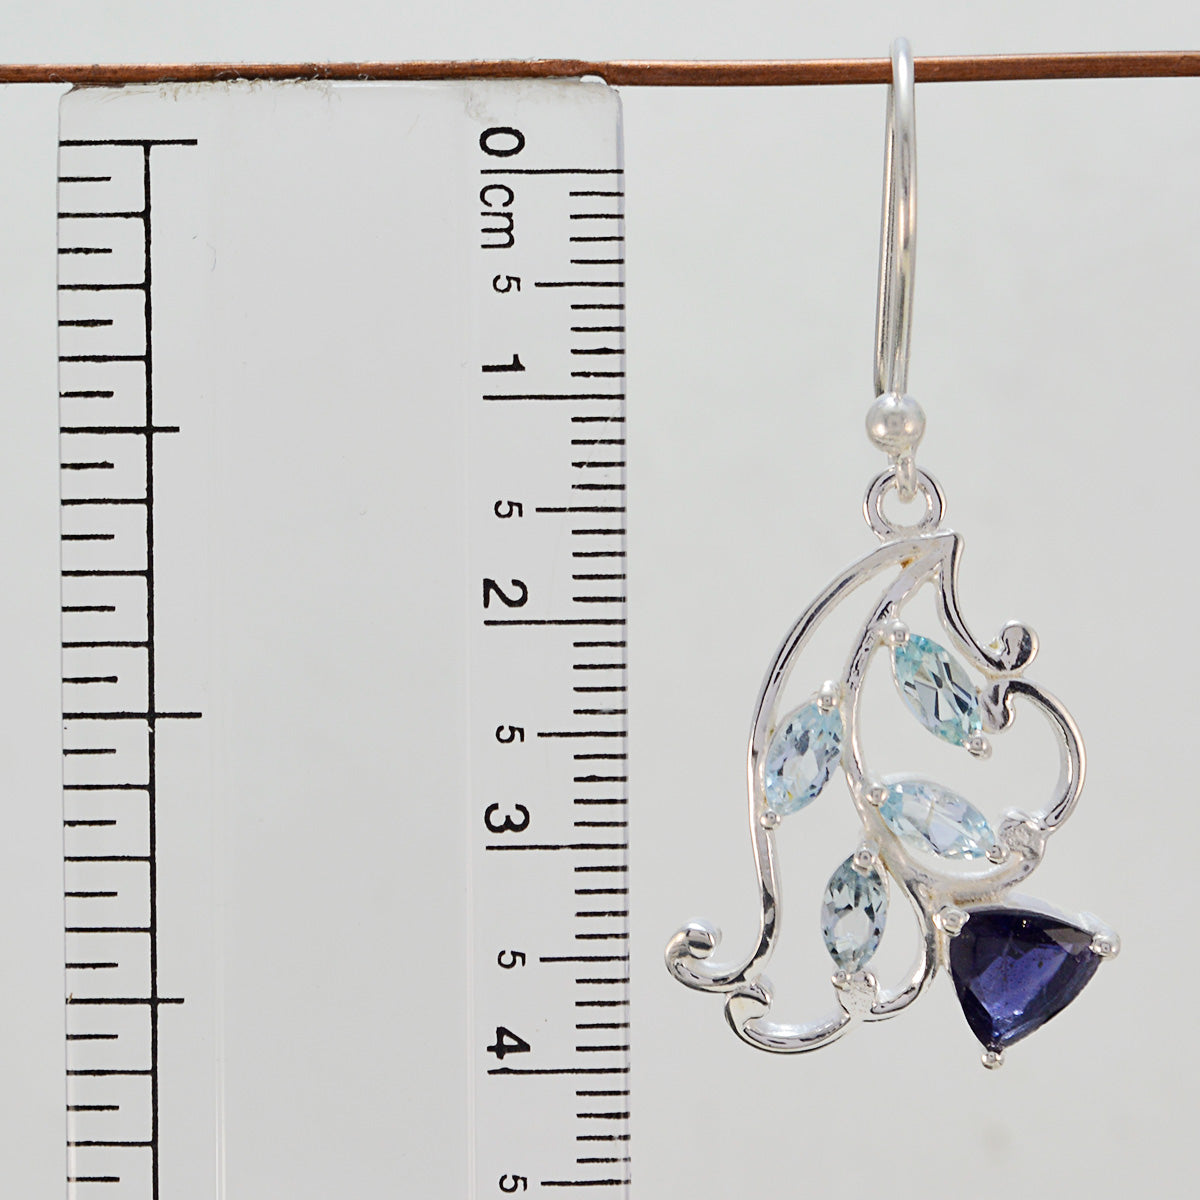 Riyo Genuine Gems multi shape Faceted Multi Multi Stone Silver Earrings mothers day gift